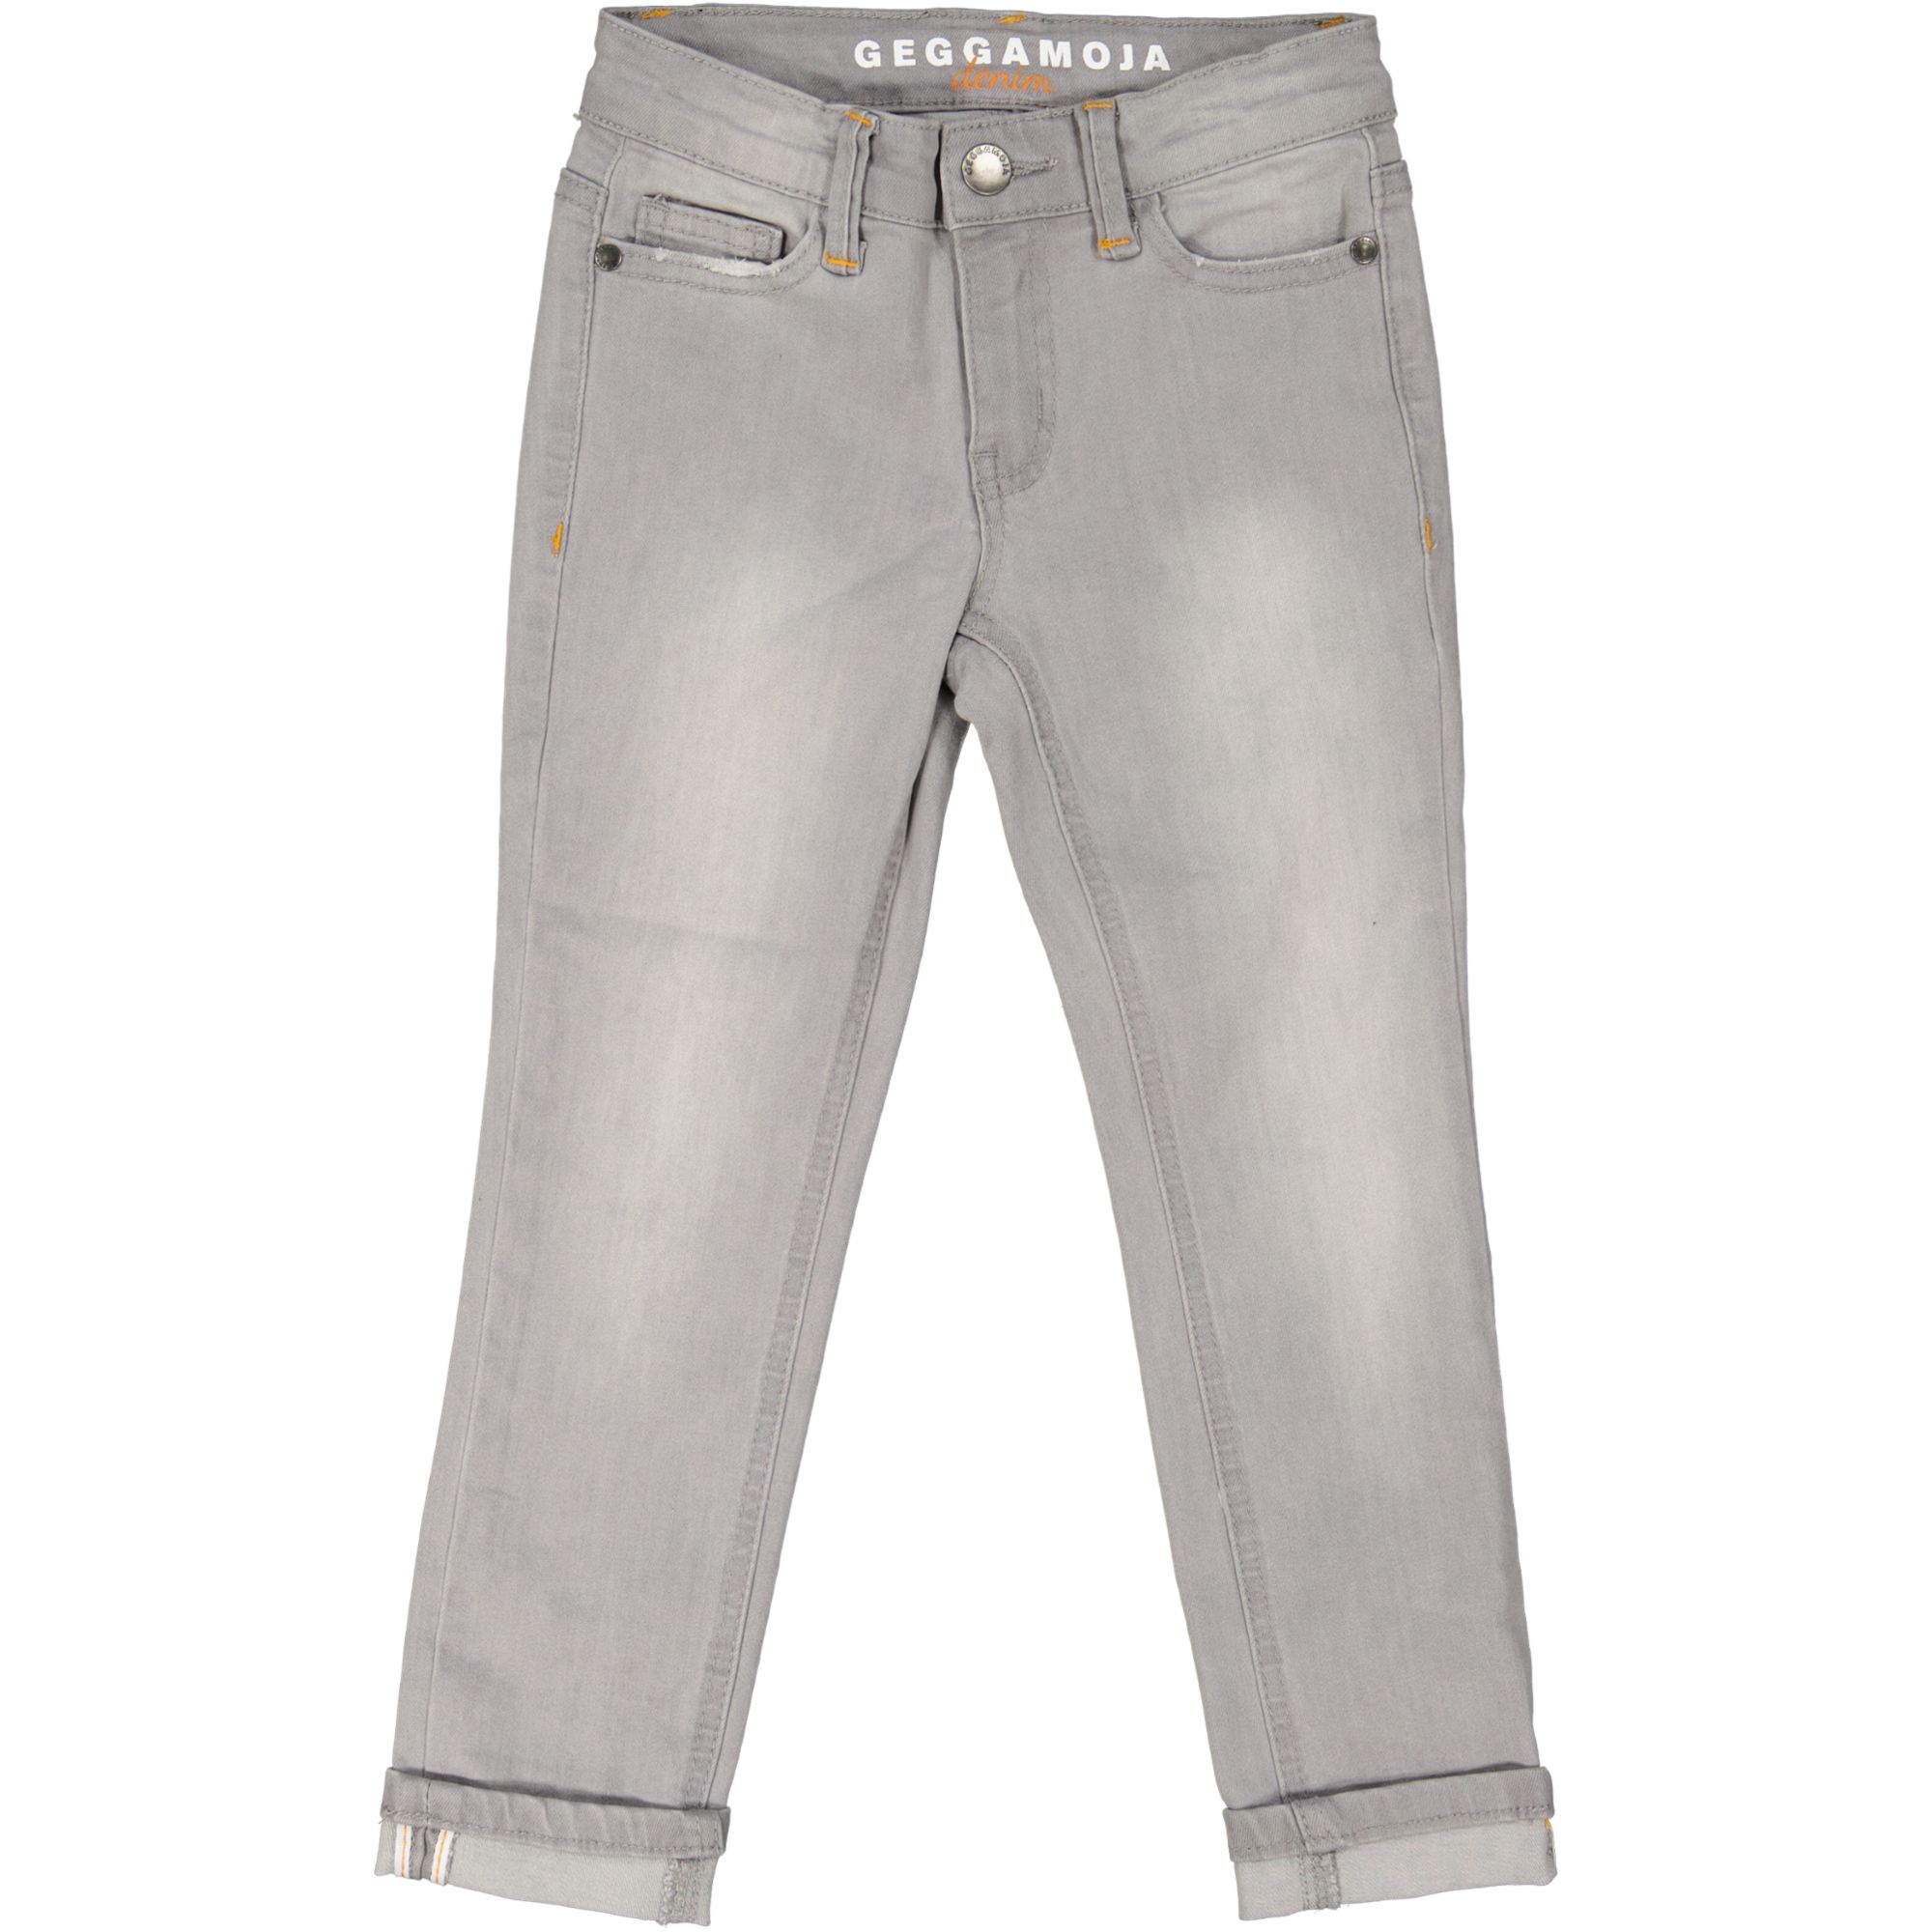 Unisex 5-pocket jeans Grey wash